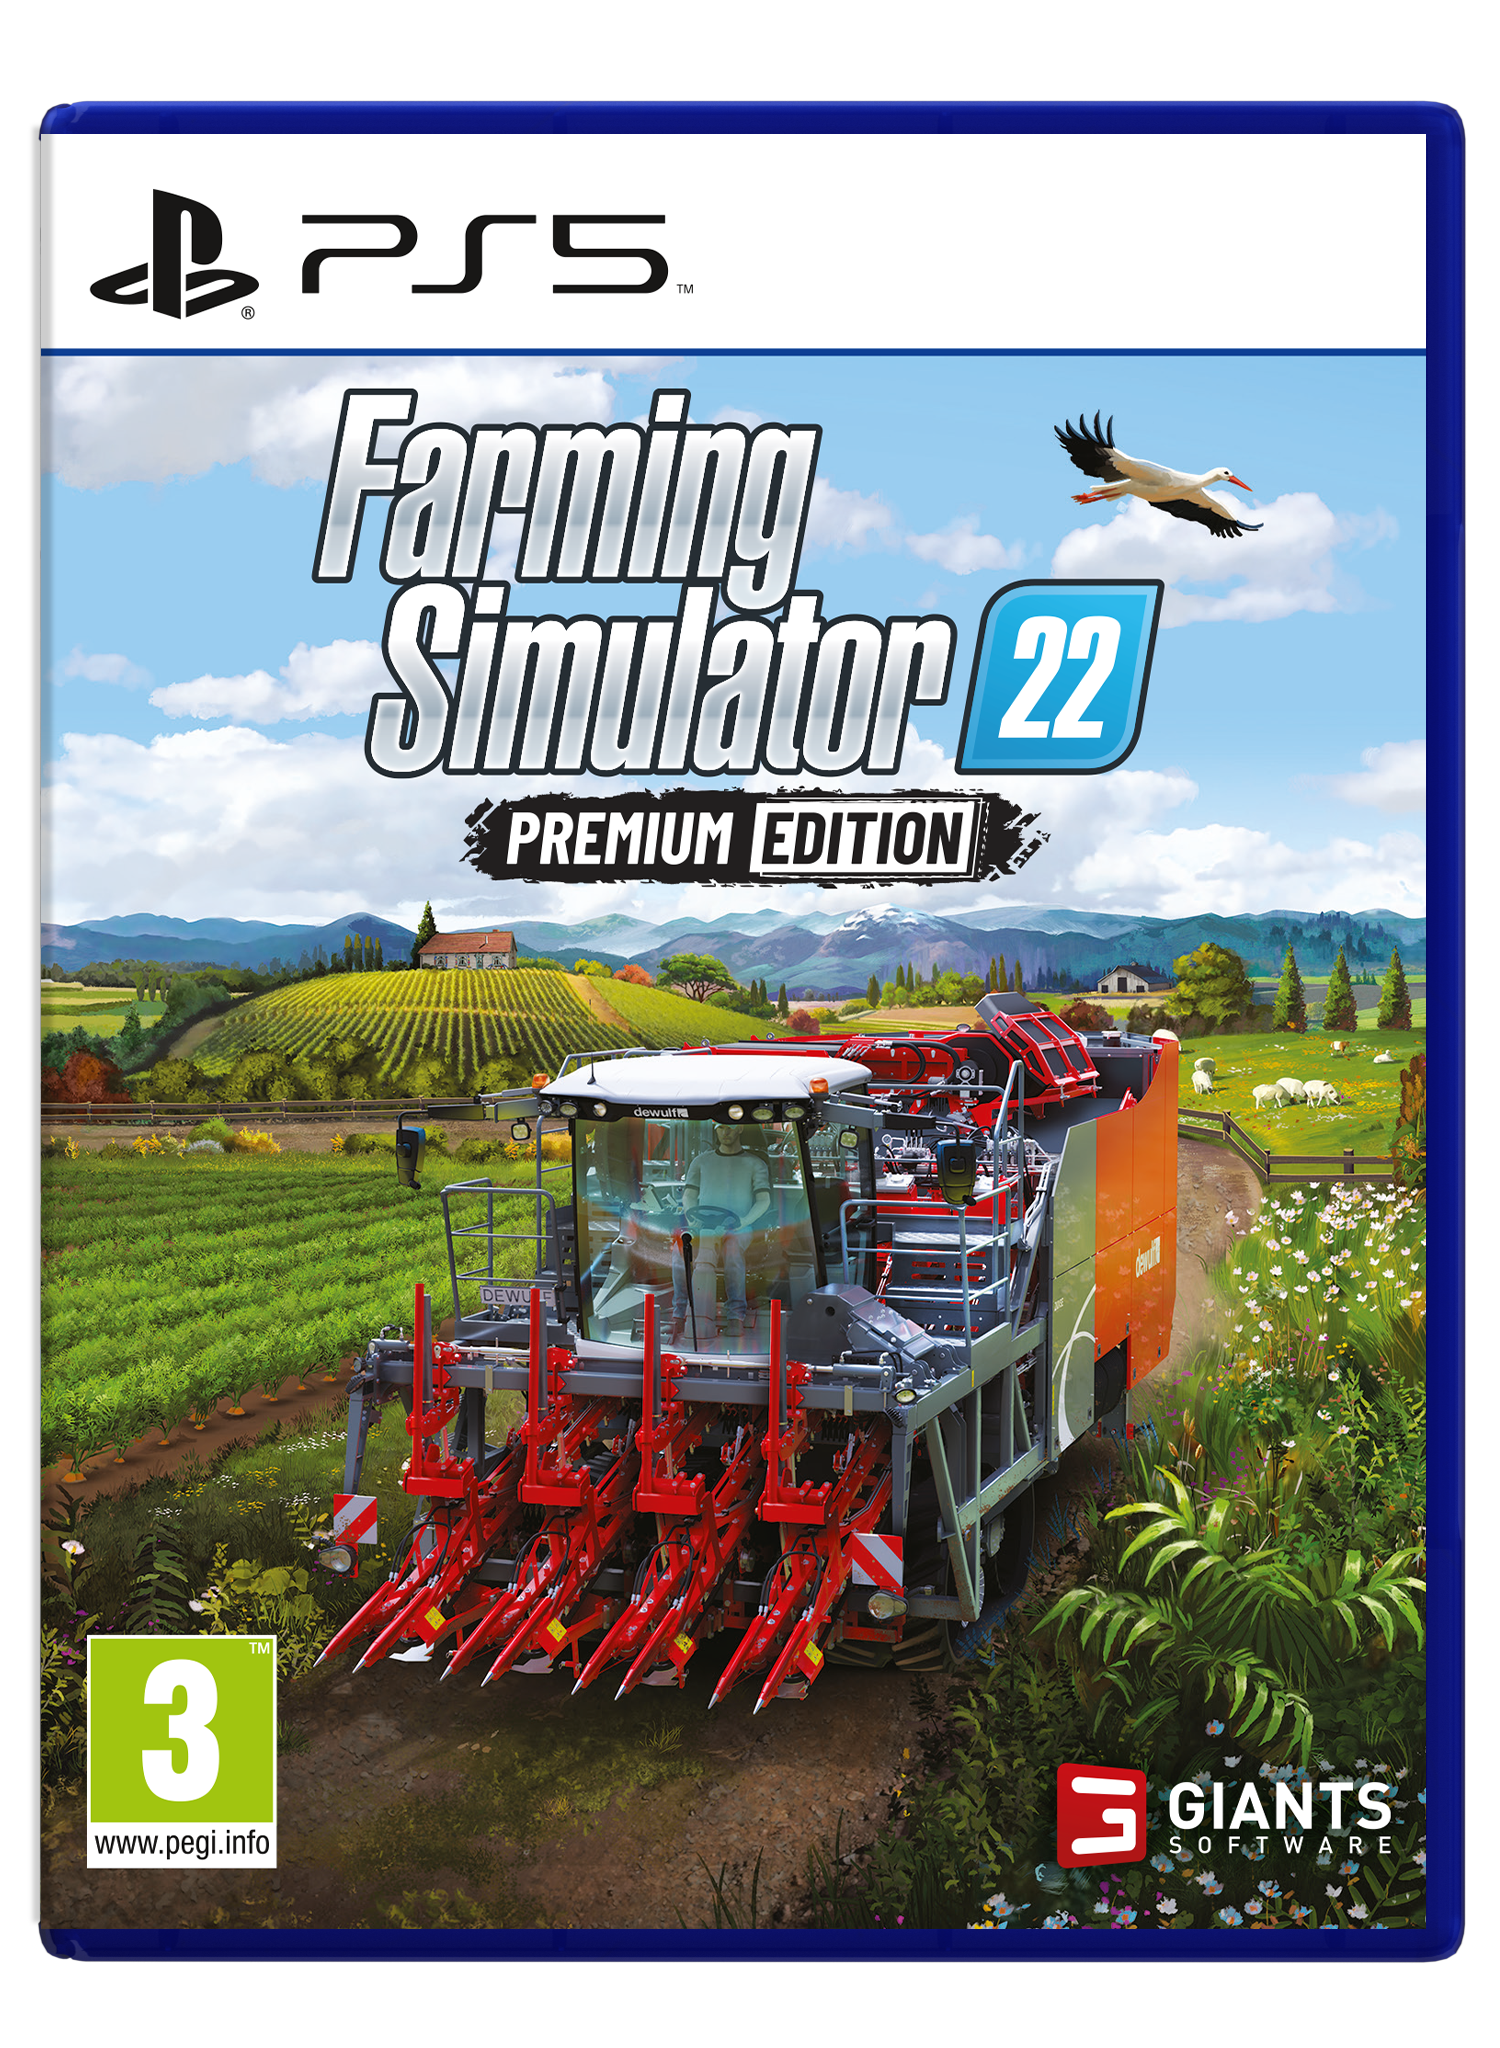 Farming Simulator 22 (PC / DVD-ROM) Missing Digital Download